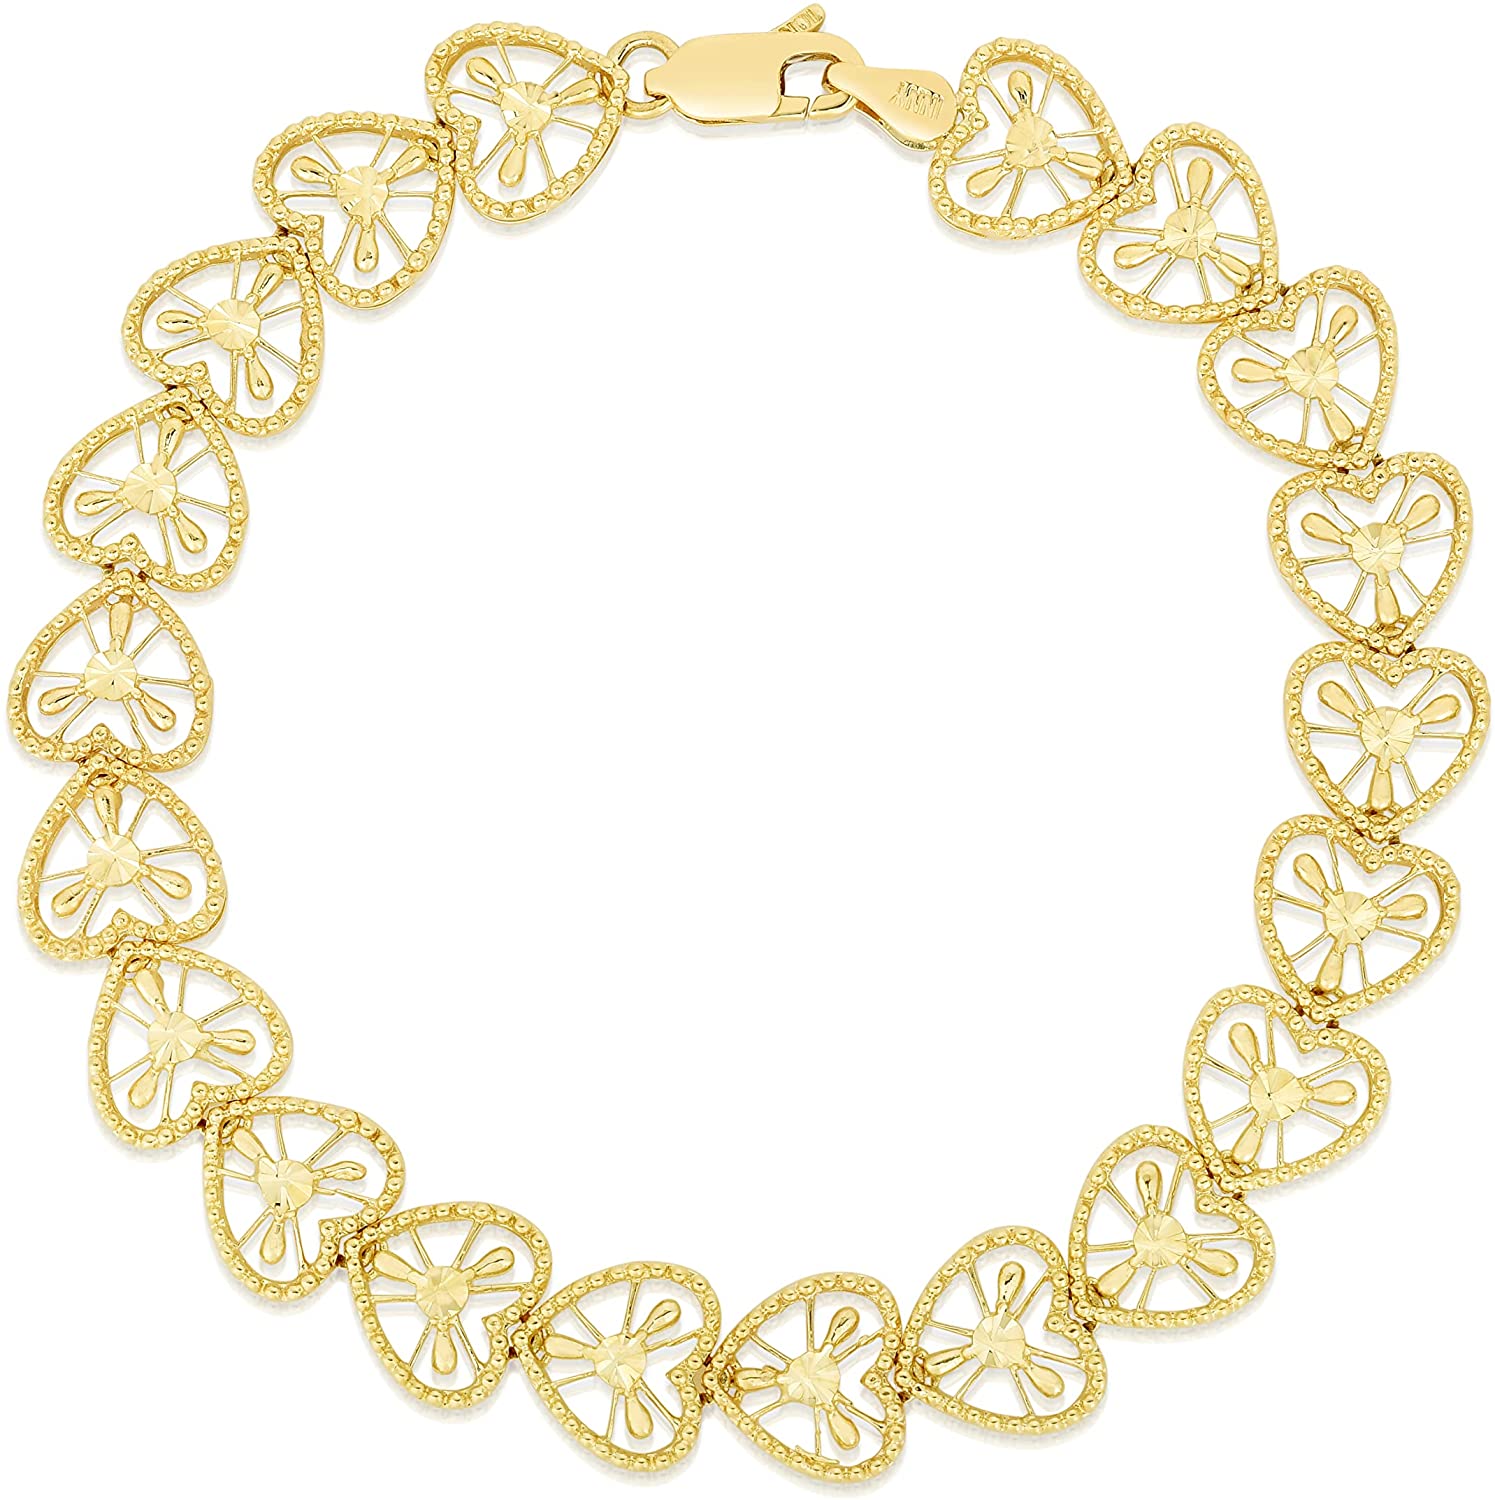 10k Yellow Gold Filigree Open Heart Shape with Anchor Design Link Bracelet